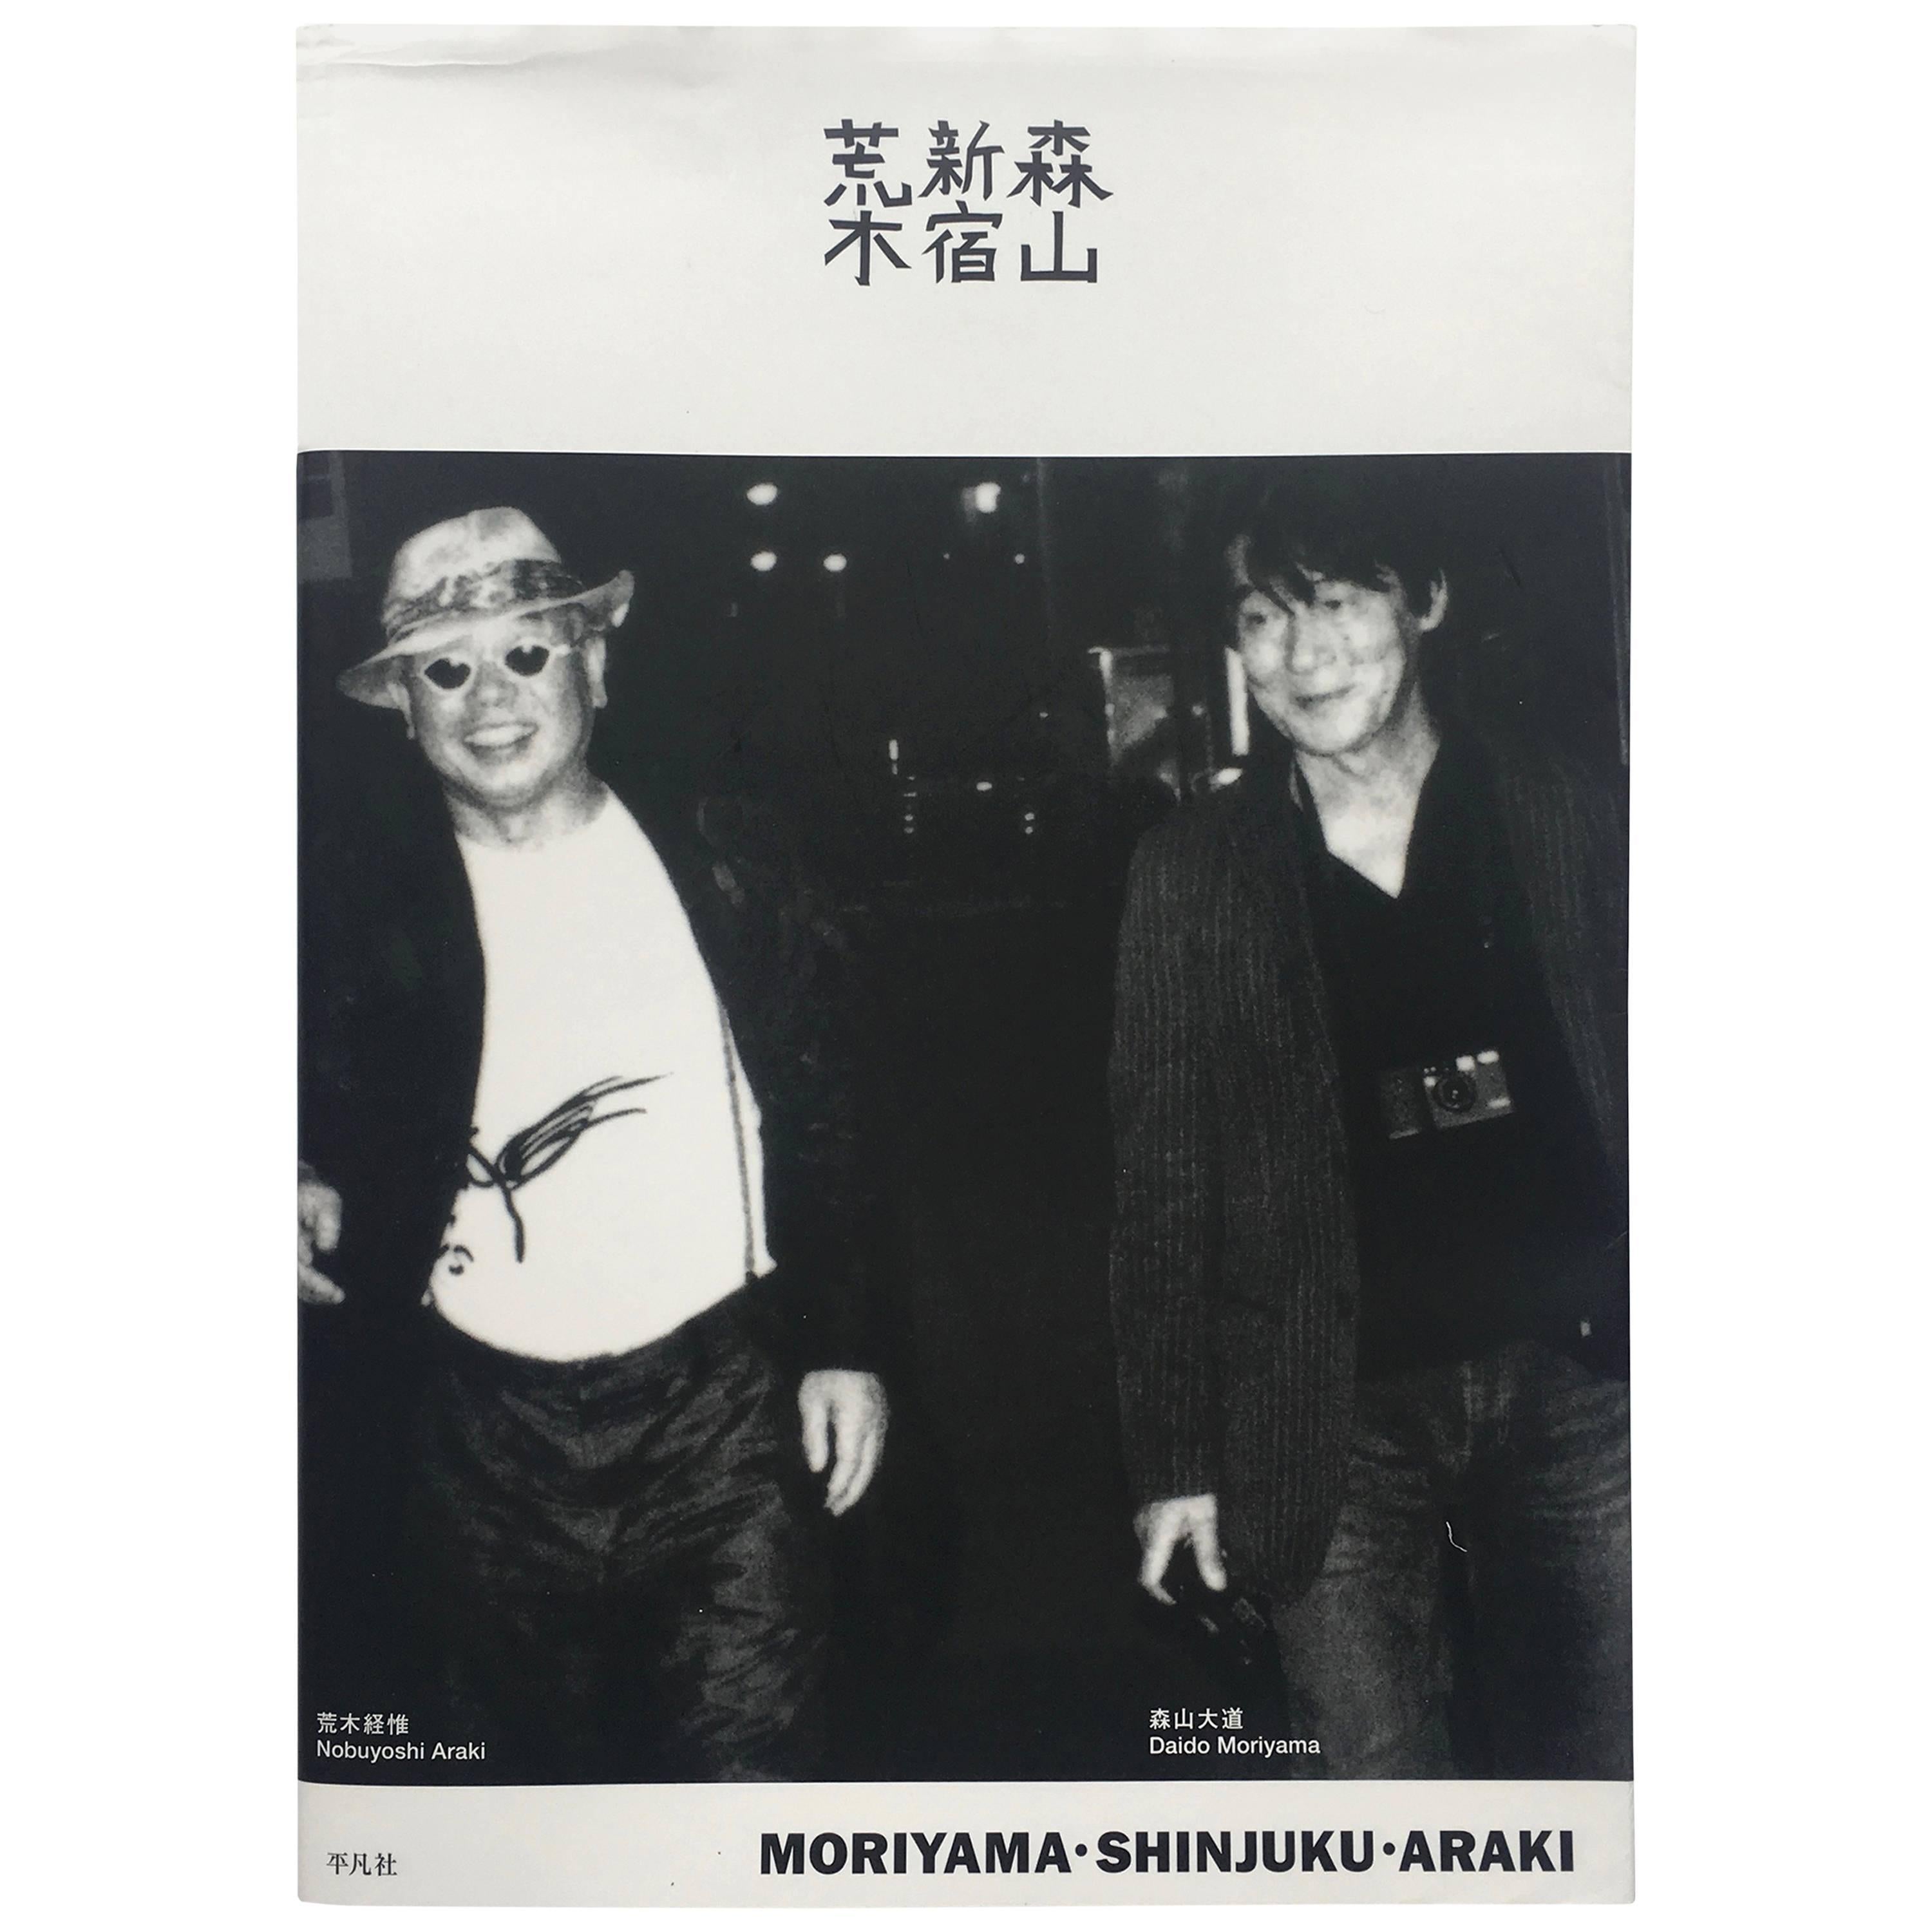 Moriyama, Shinjuku, Araki - Daido Moriyama, Nobuyoshi Araki - 1st Edition, 2005 For Sale